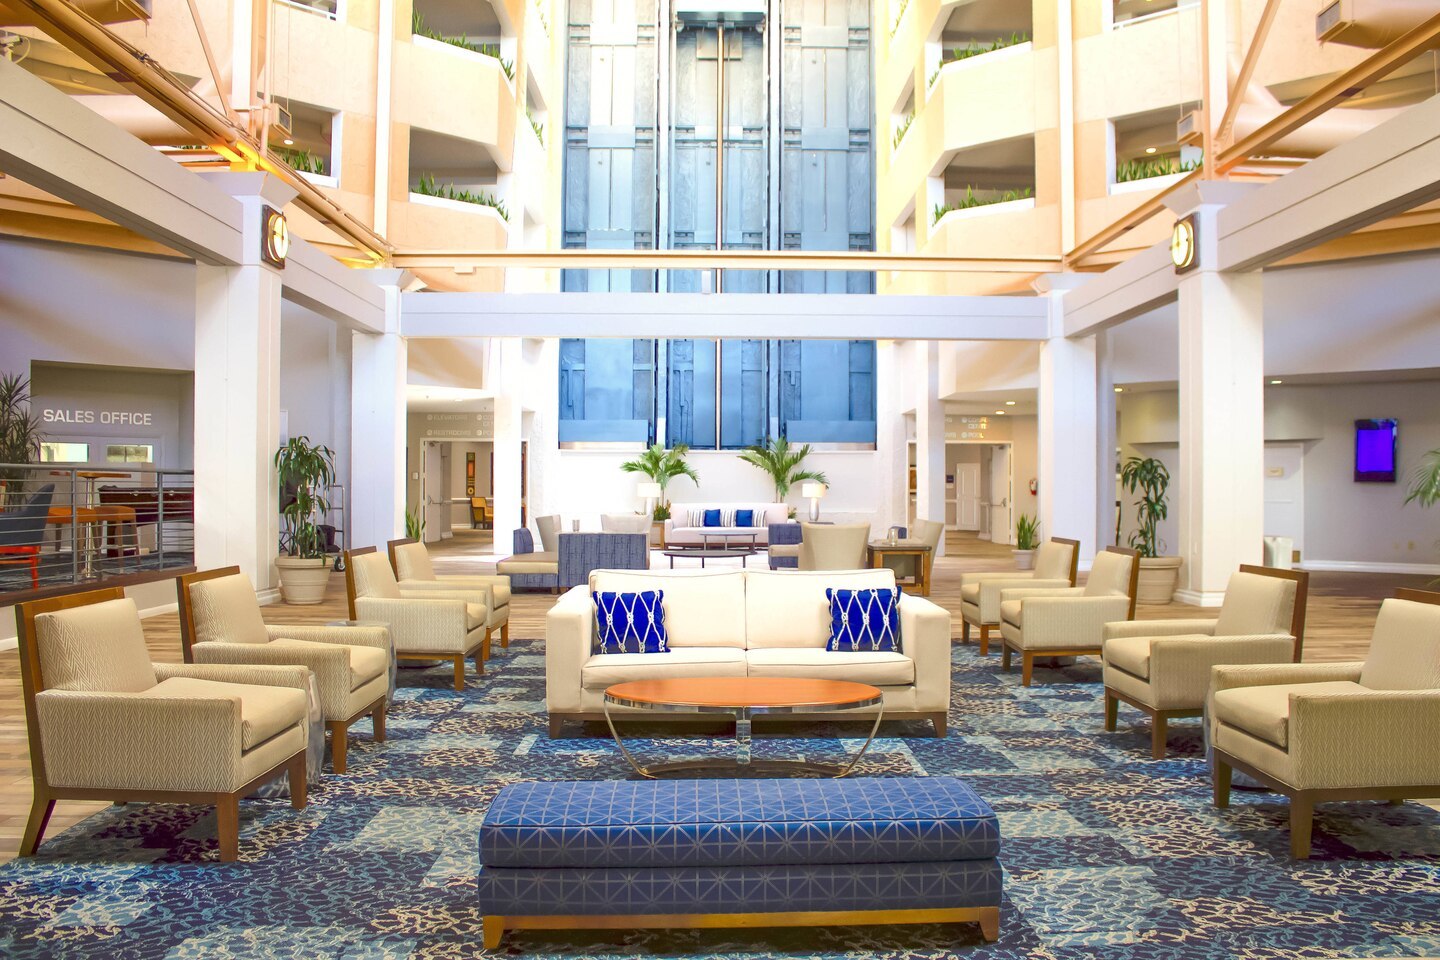 The atrium inside The Southbank Hotel at Jacksonville Riverwalk (Marriott photo)